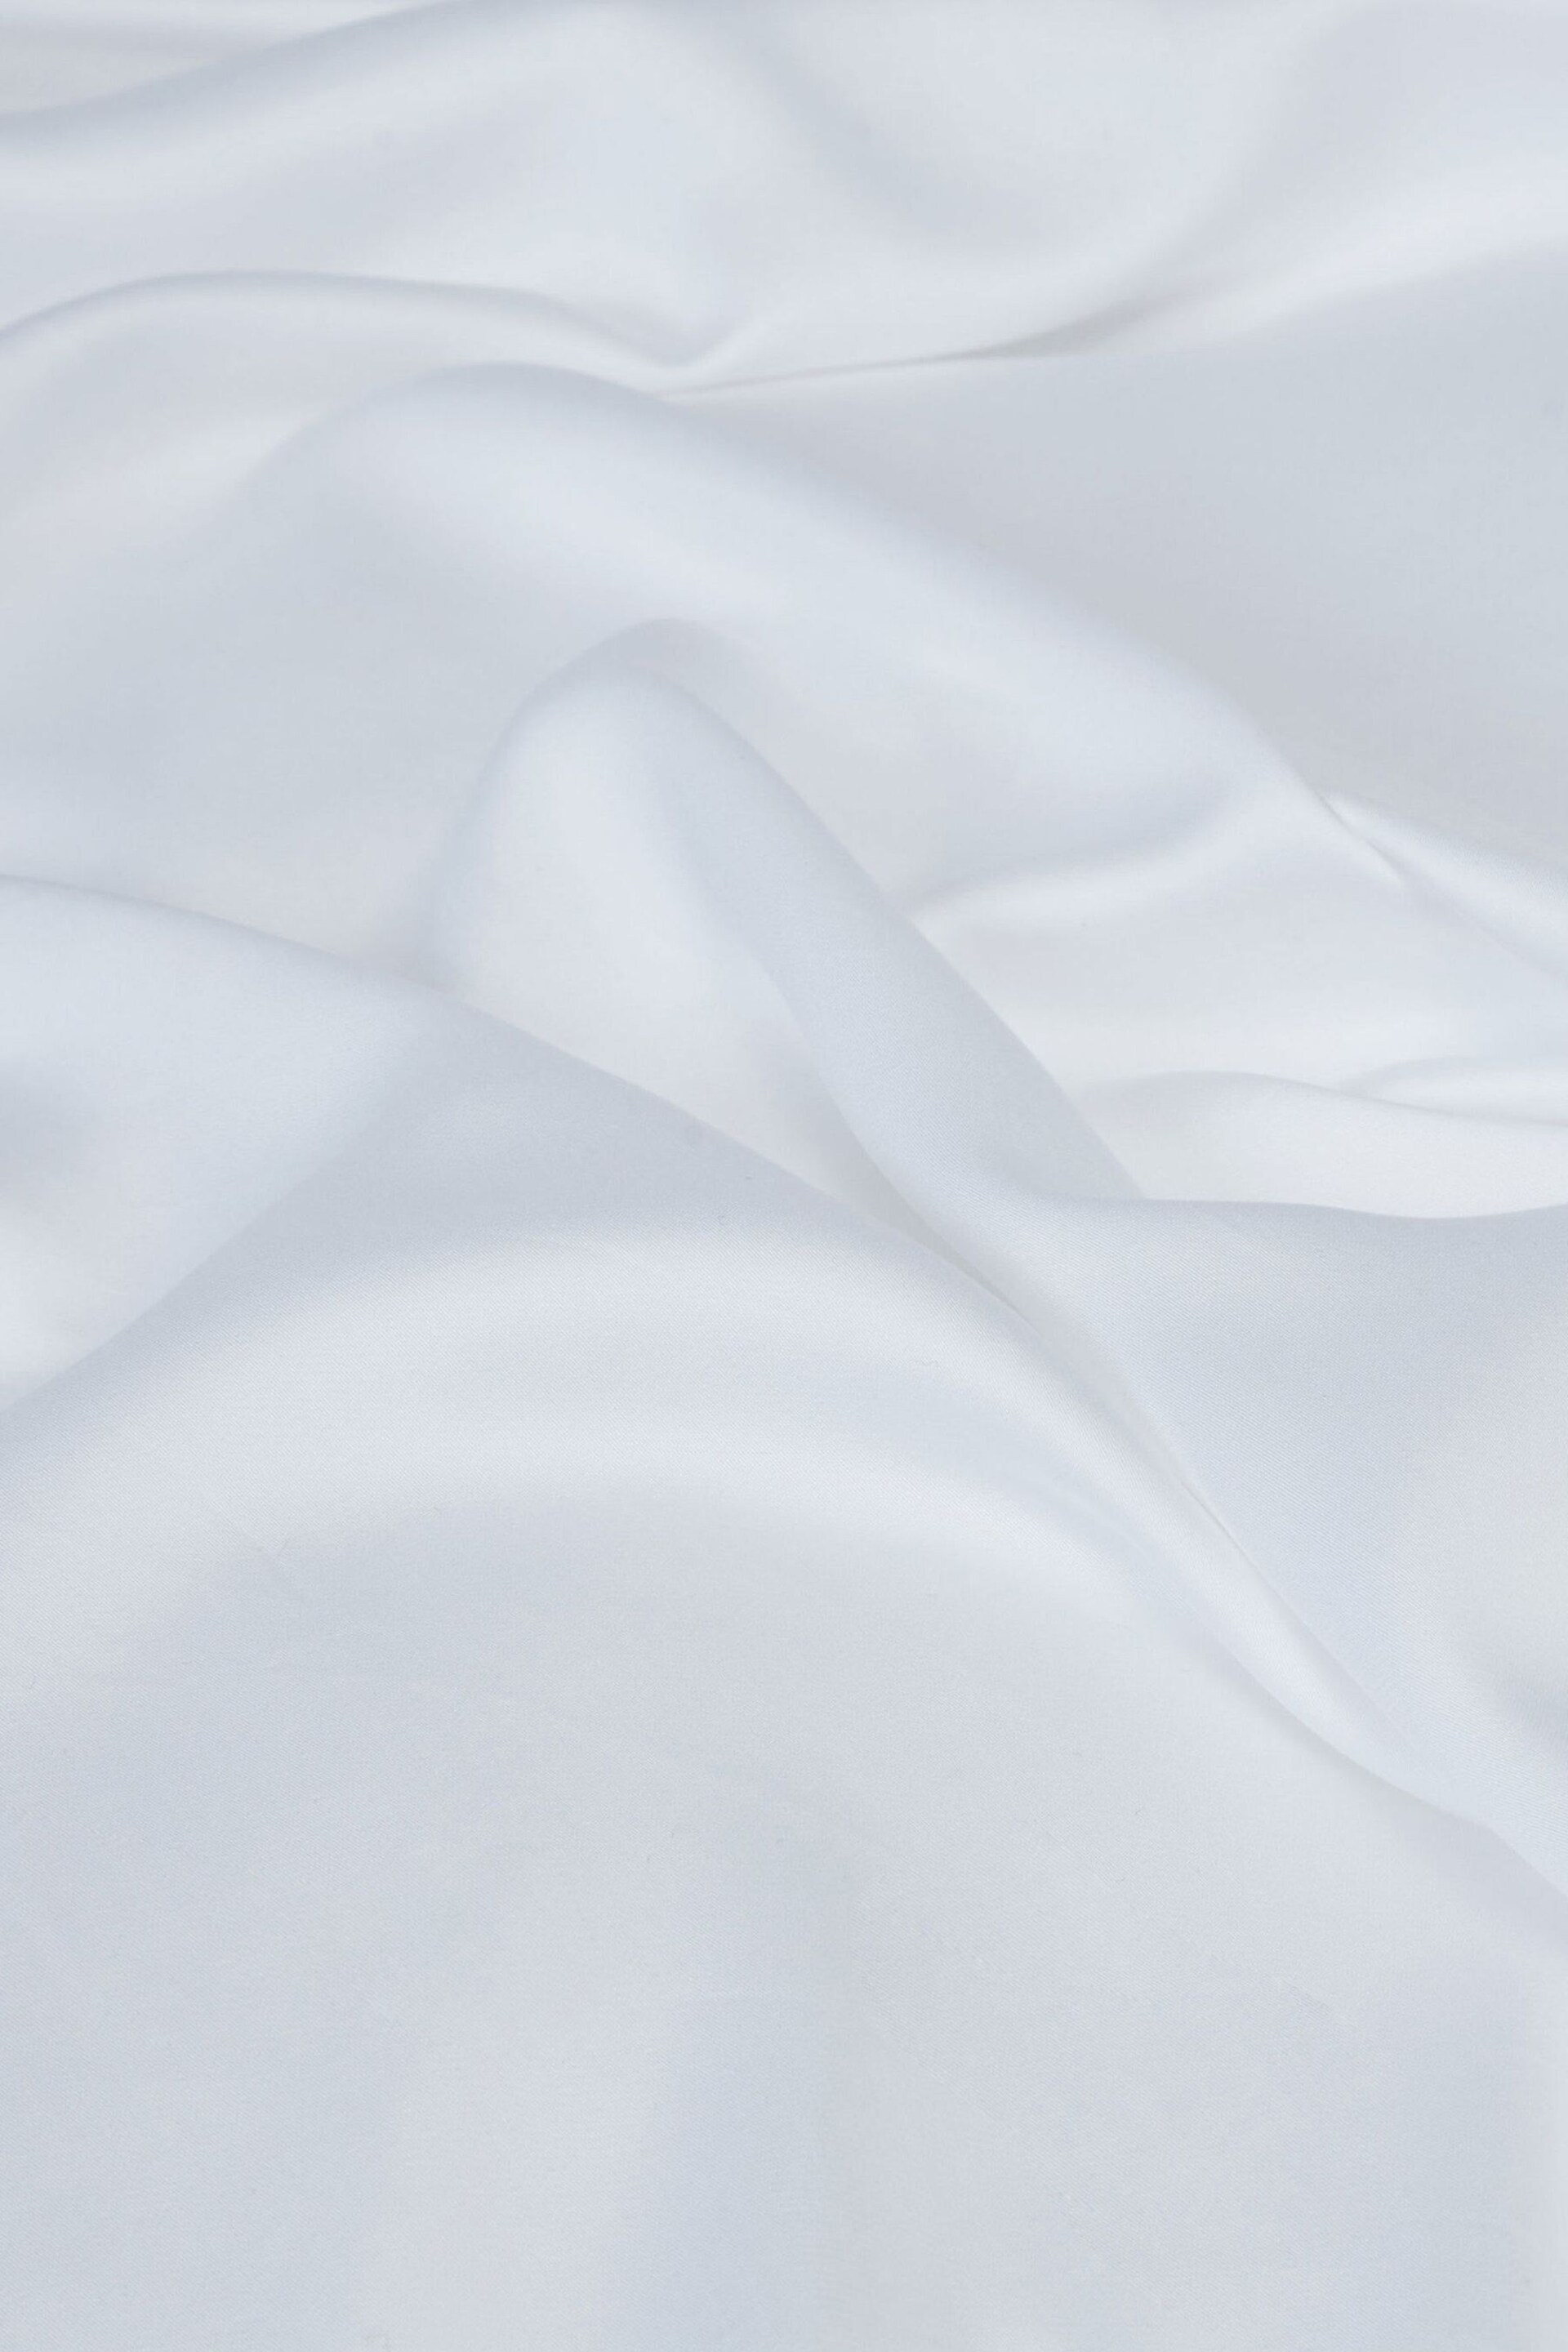 Panda London White Bamboo Pillowcases - Pack of 2 - Image 6 of 6